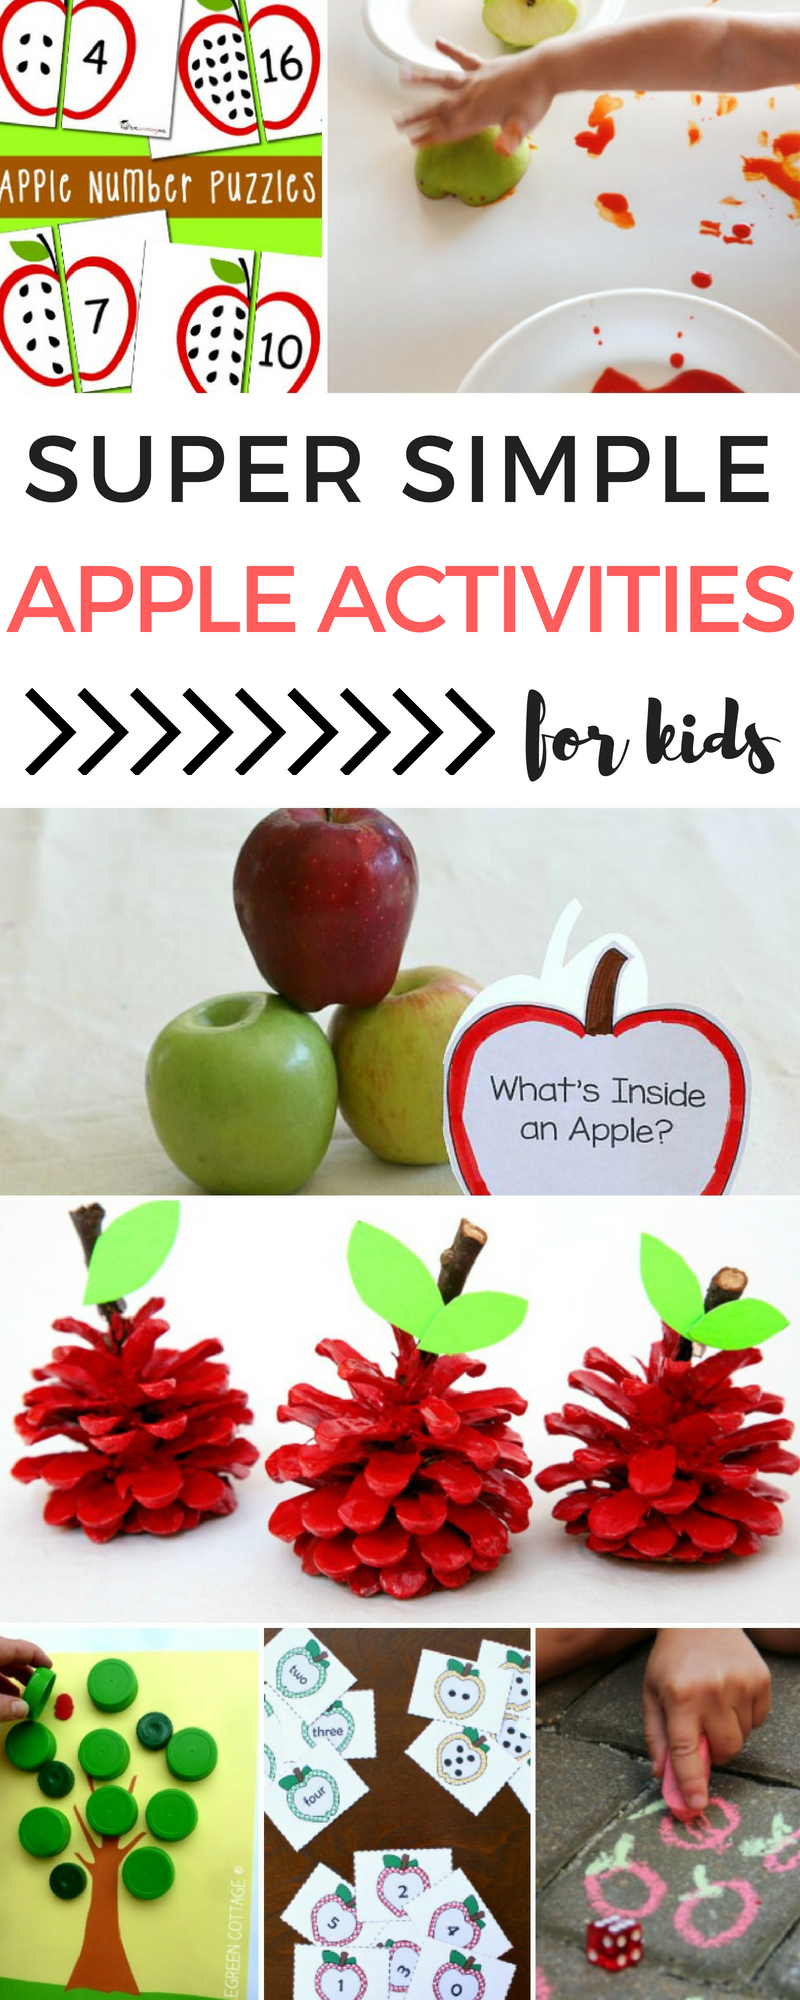 Super Simple Apple Activities for Kids